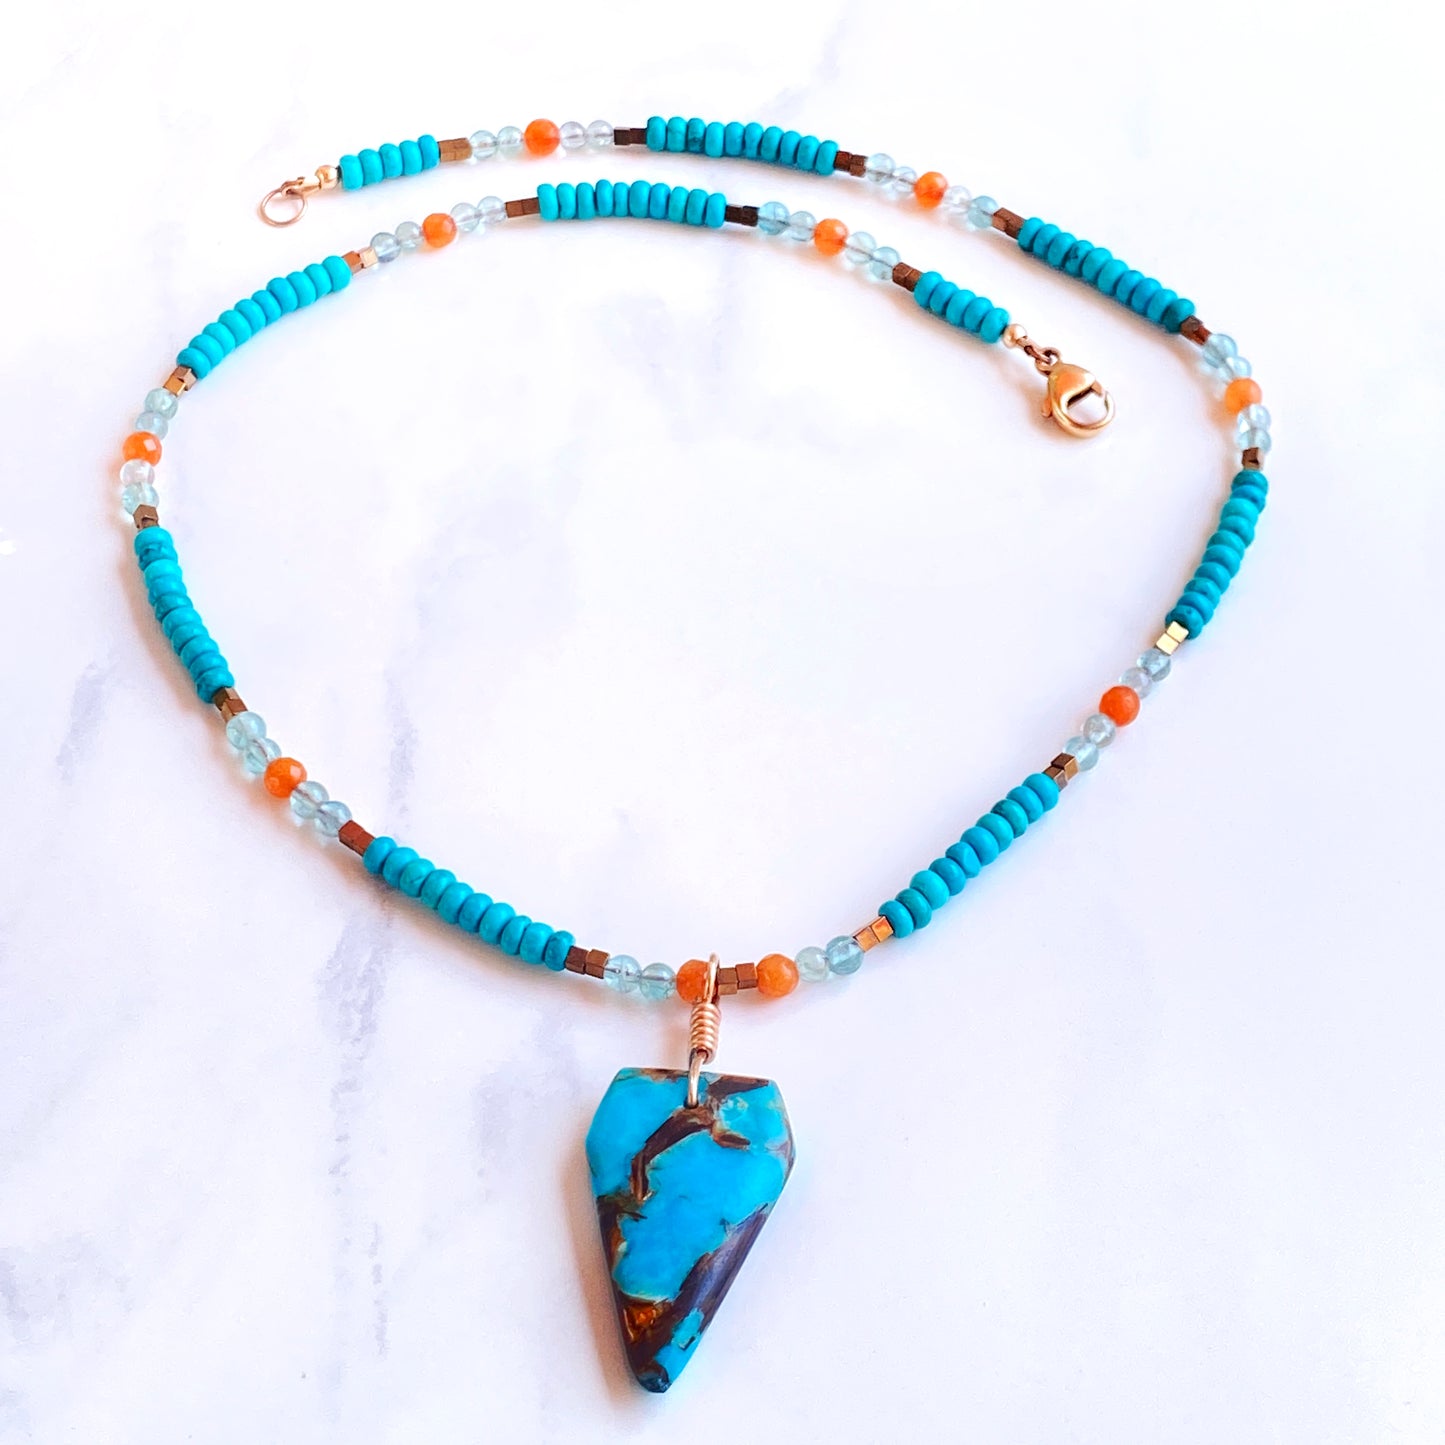 Bornite gemstone arrowhead pendant on Blue Howlite beaded necklace